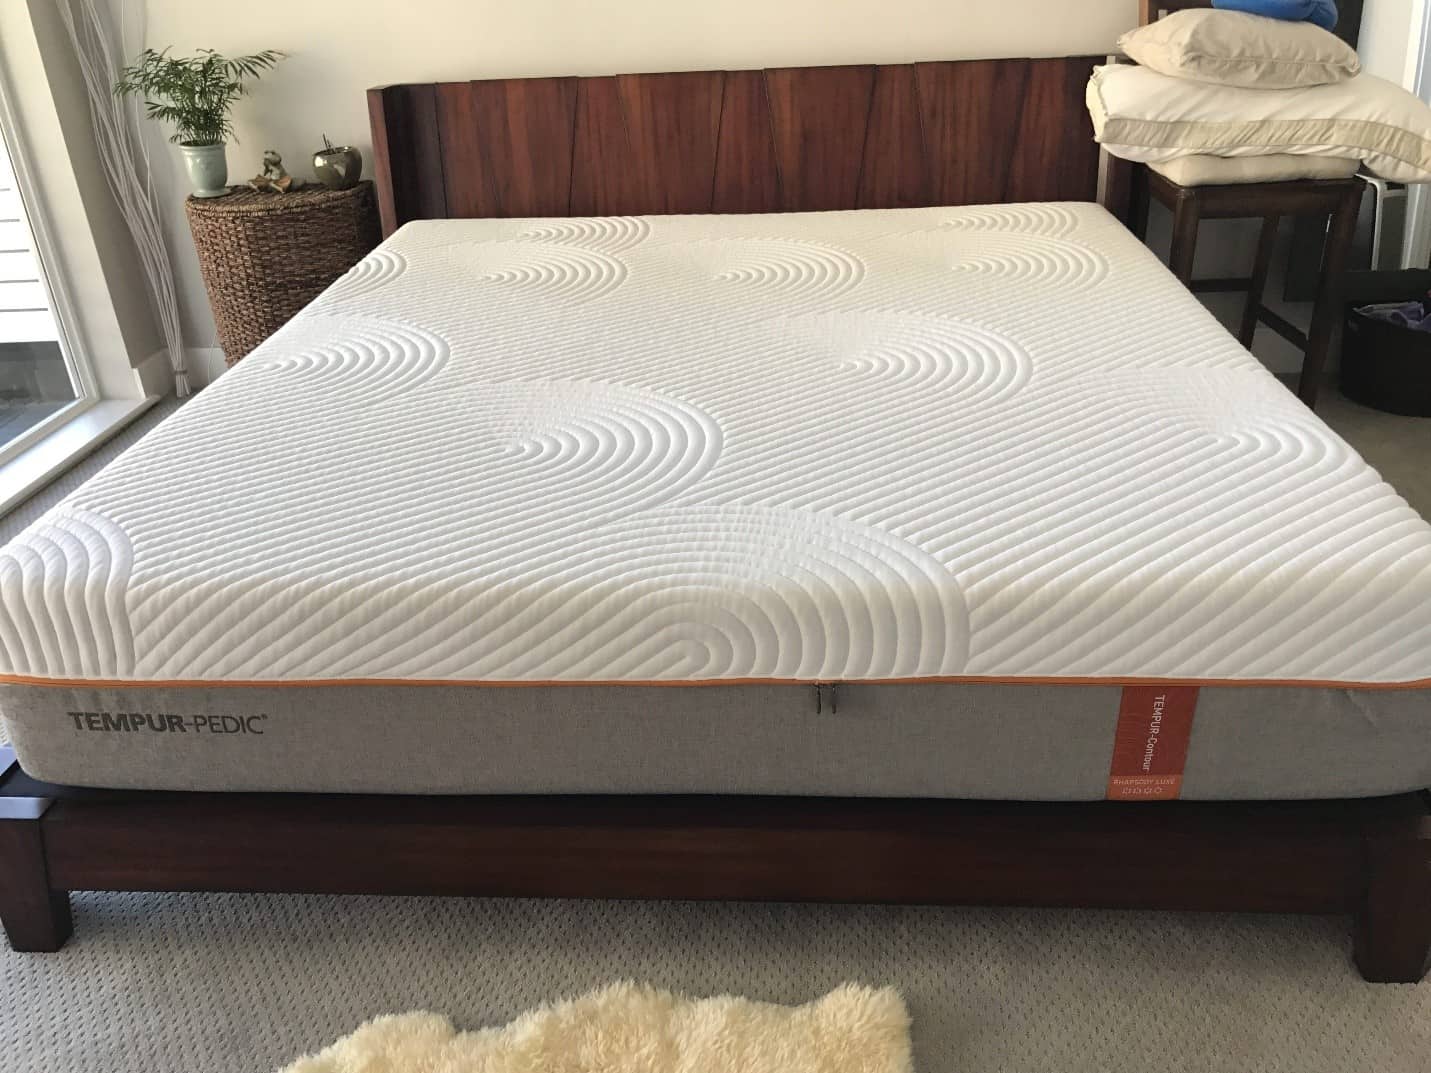 platform bed for tempurpedic mattress